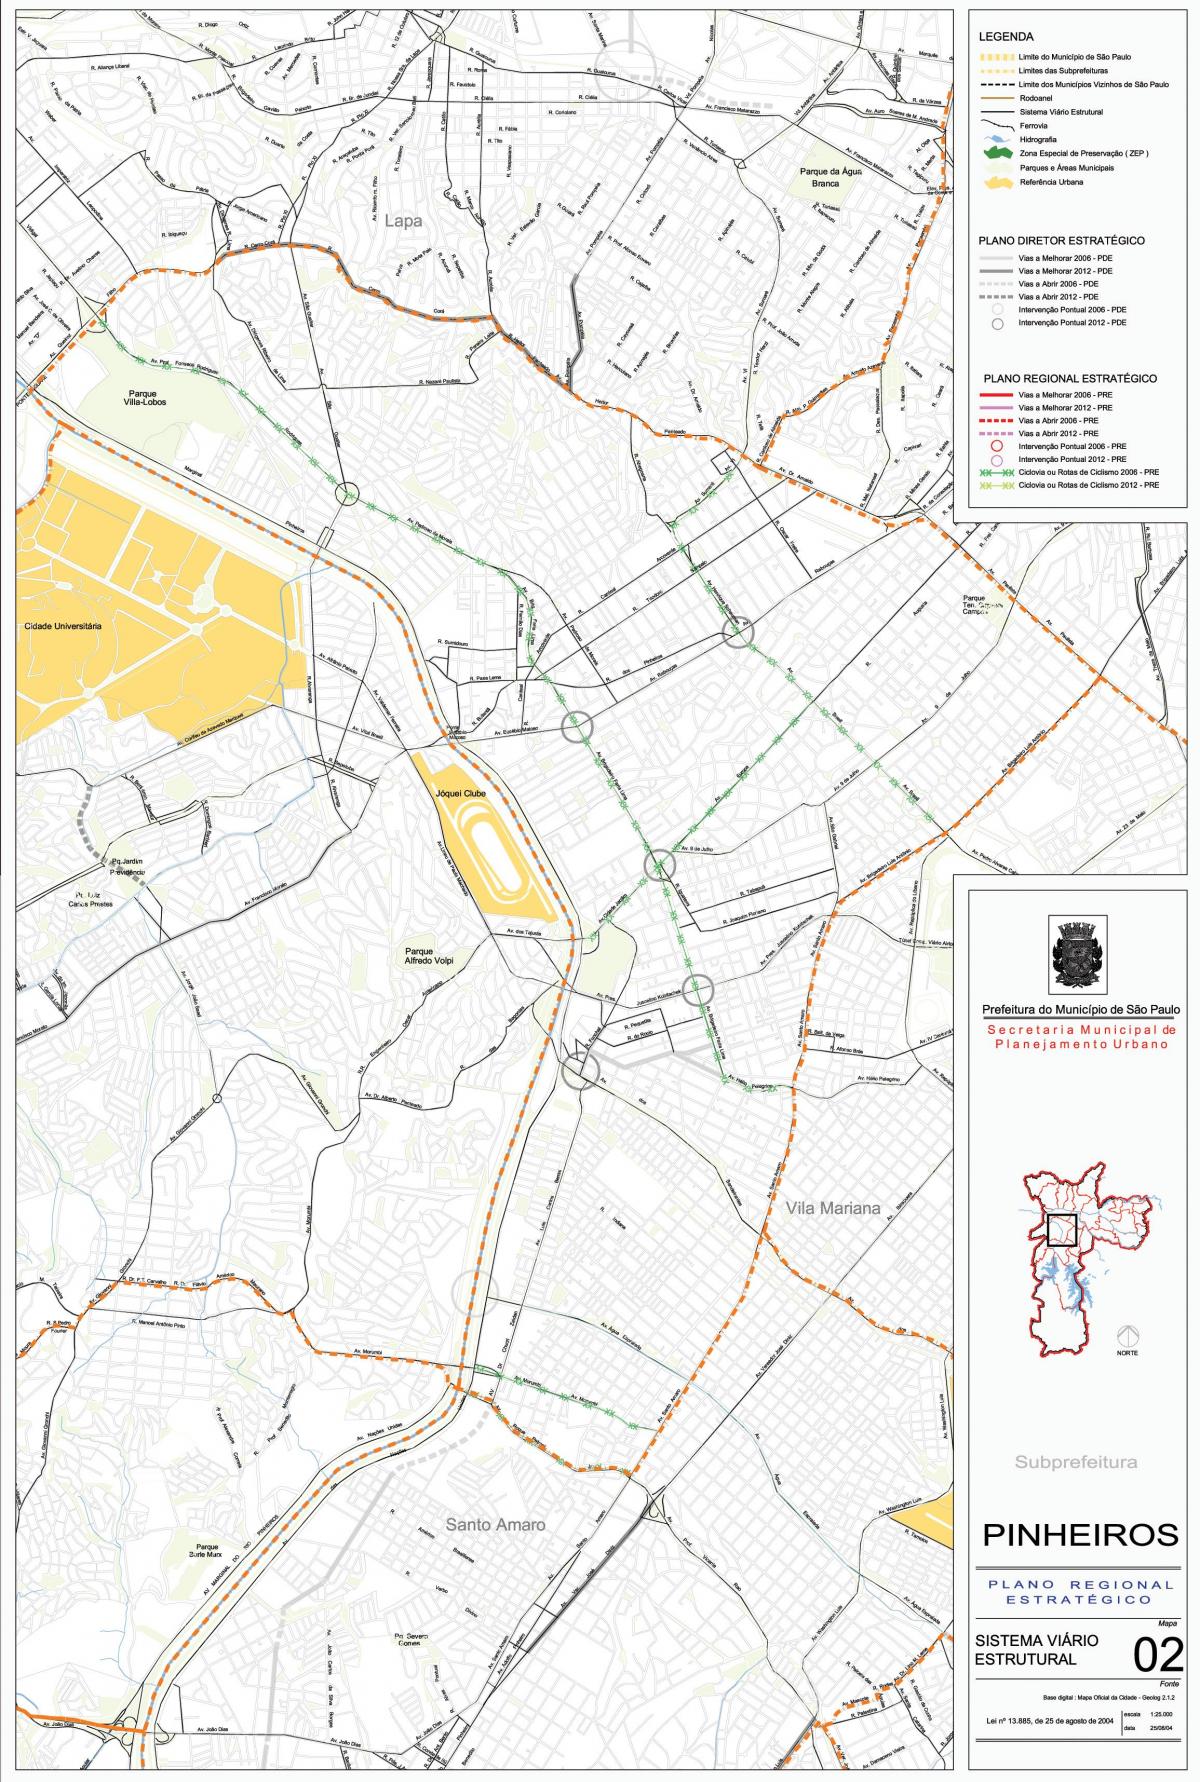 Zemljevid Pinheiros Sao Paulo - Ceste